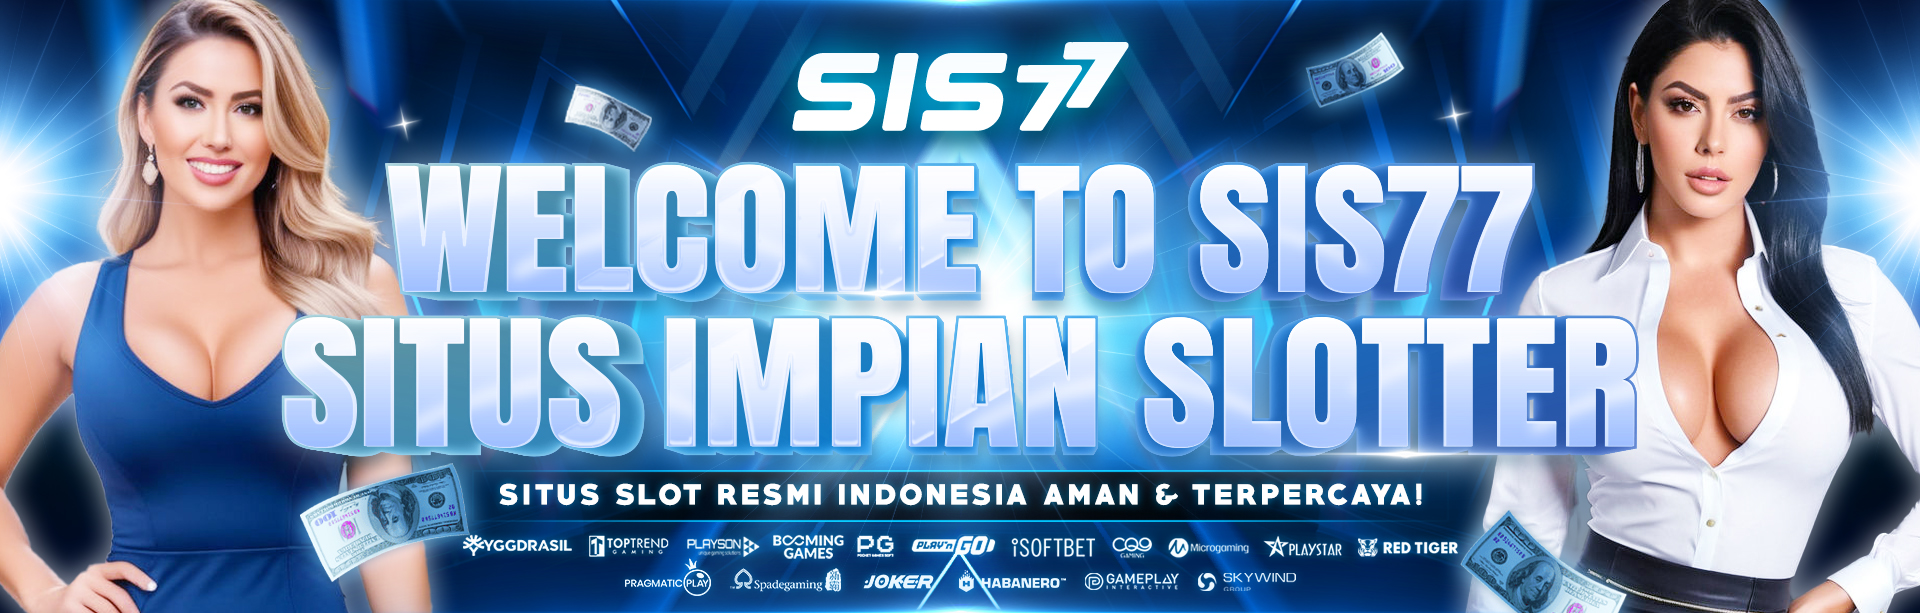 SIS77 Selamat Datang